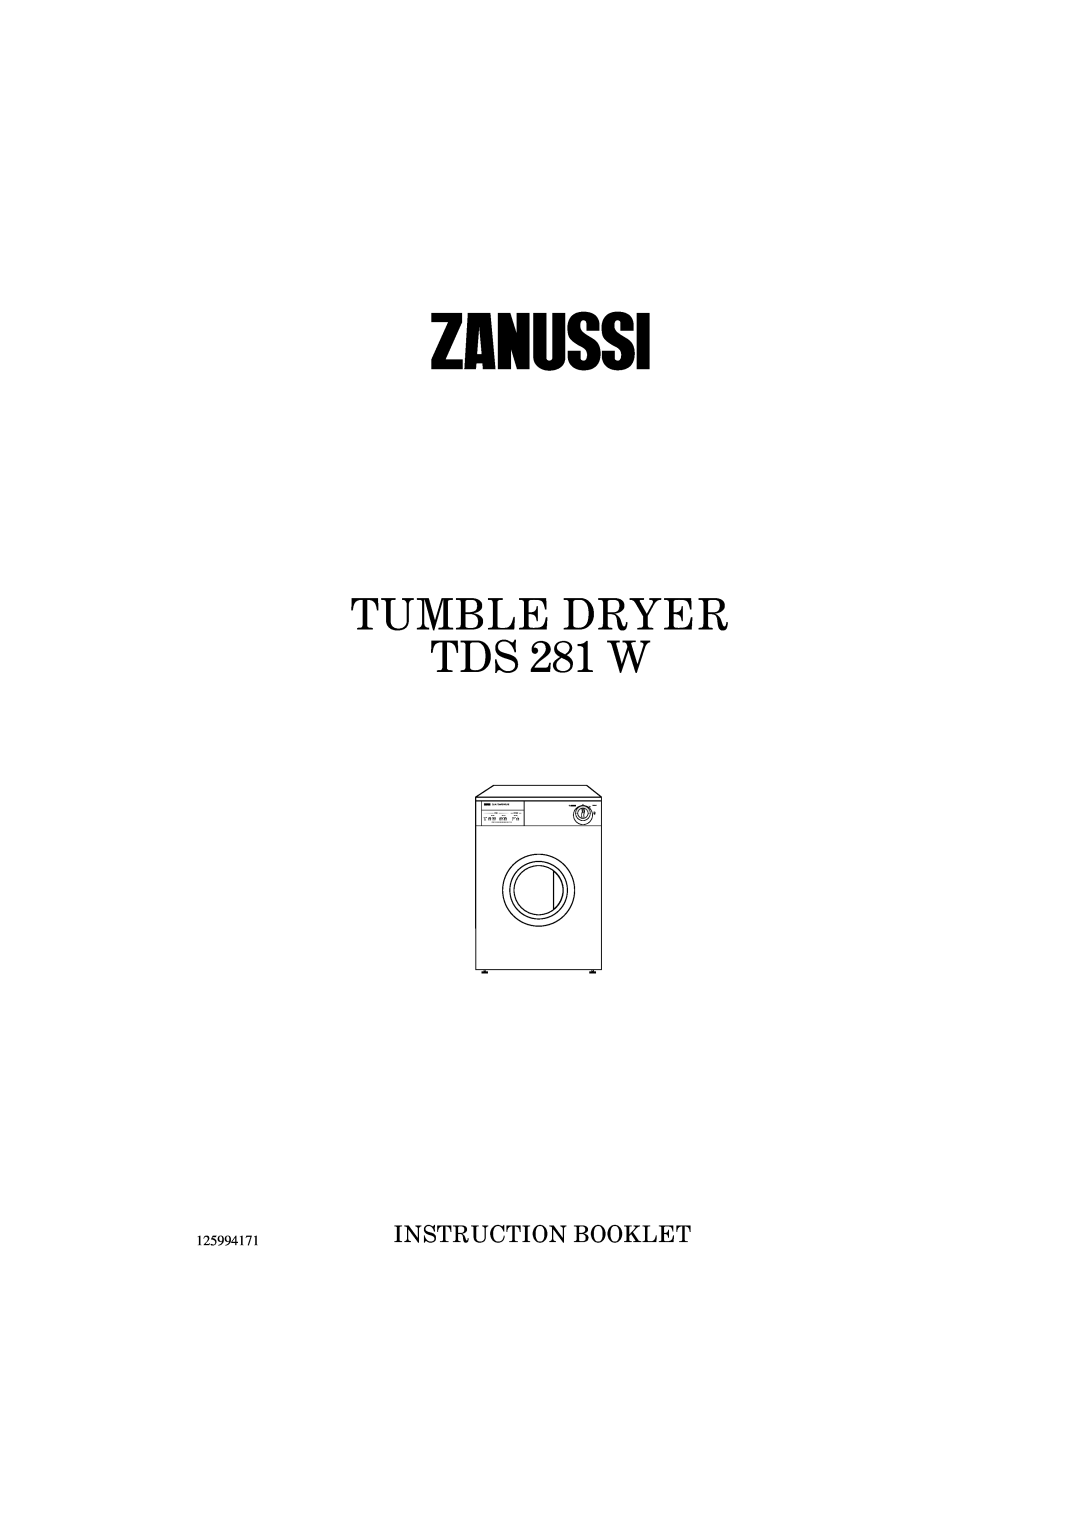 Zanussi manual TUMBLE DRYER TDS 281 W, Instruction Booklet, Dual Temperature 